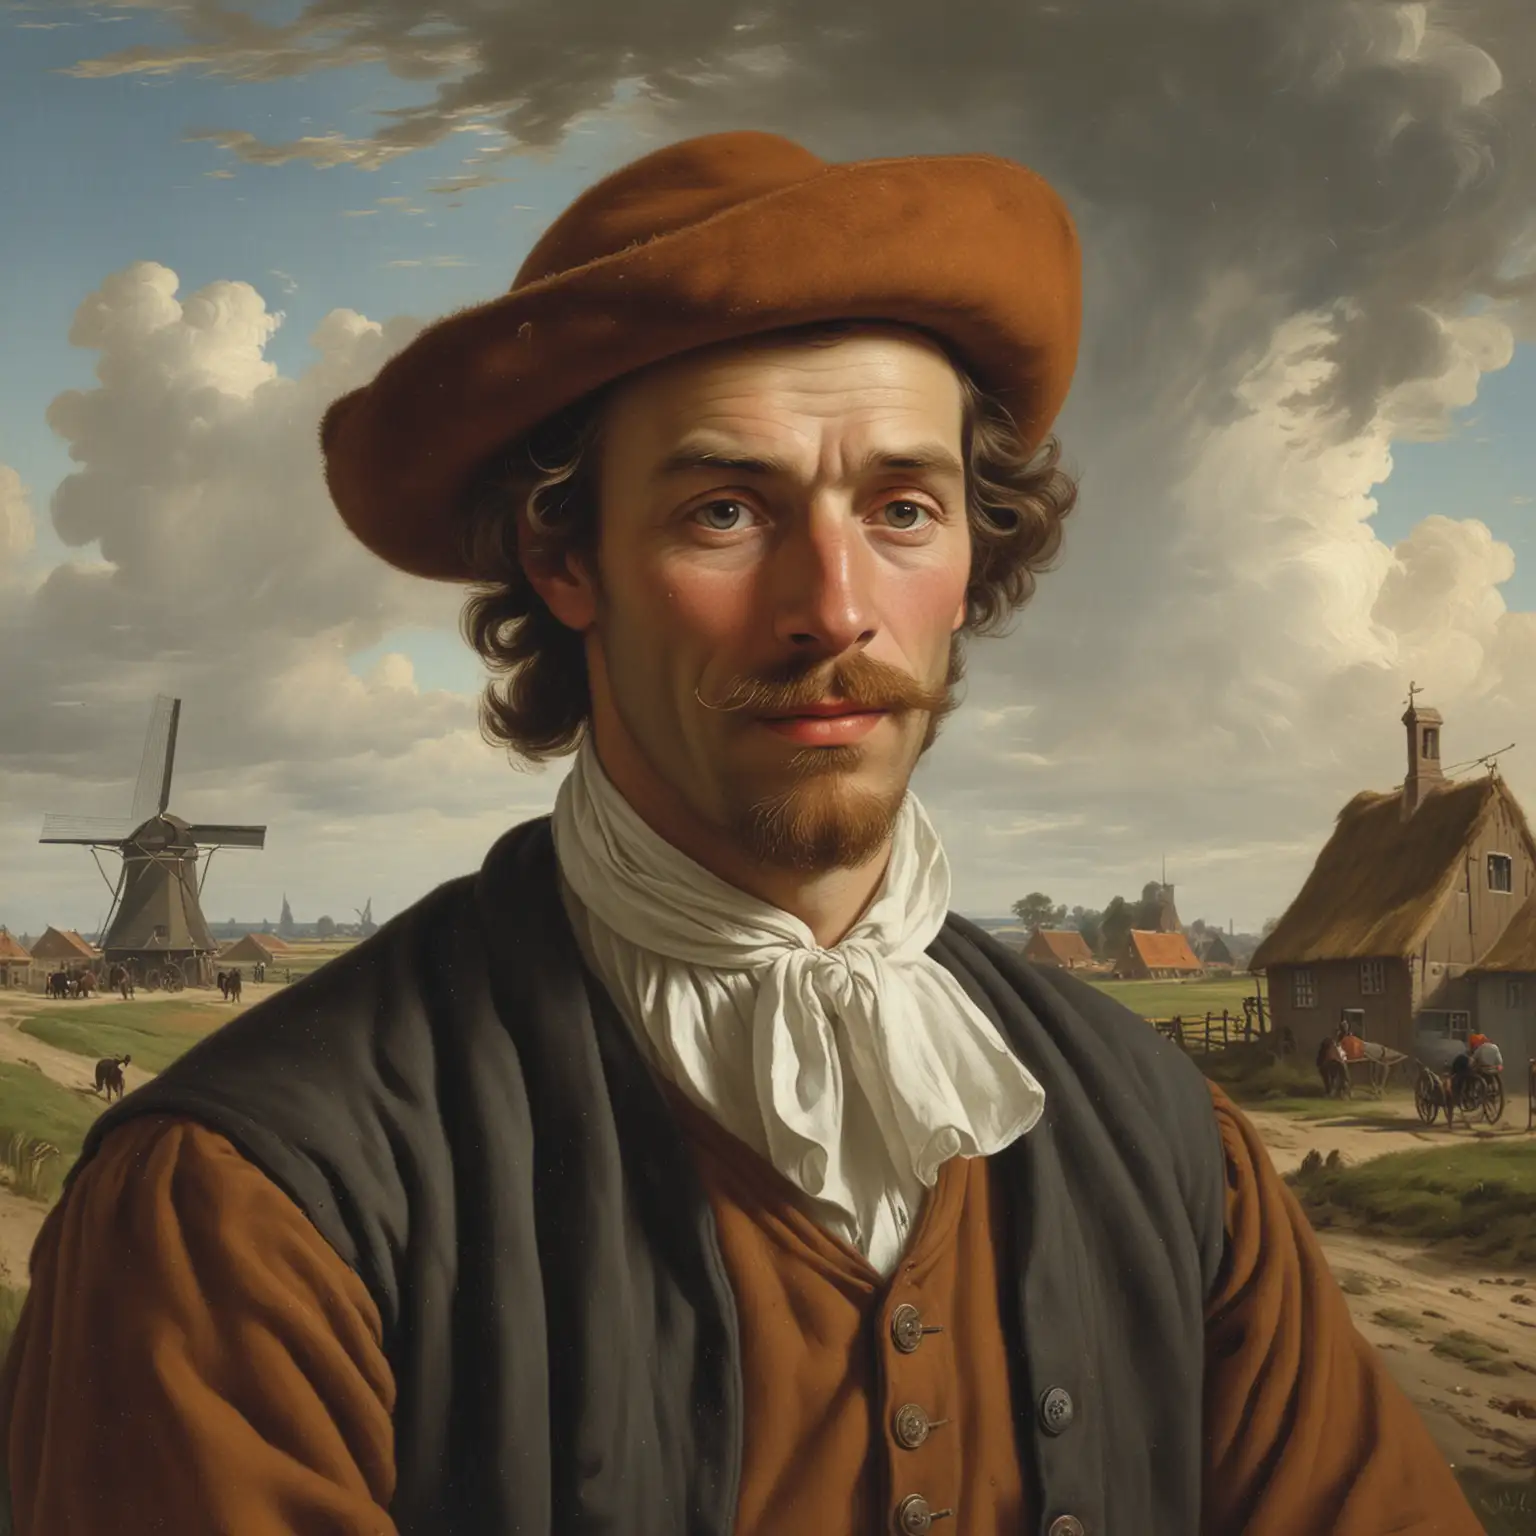 A Dutch man